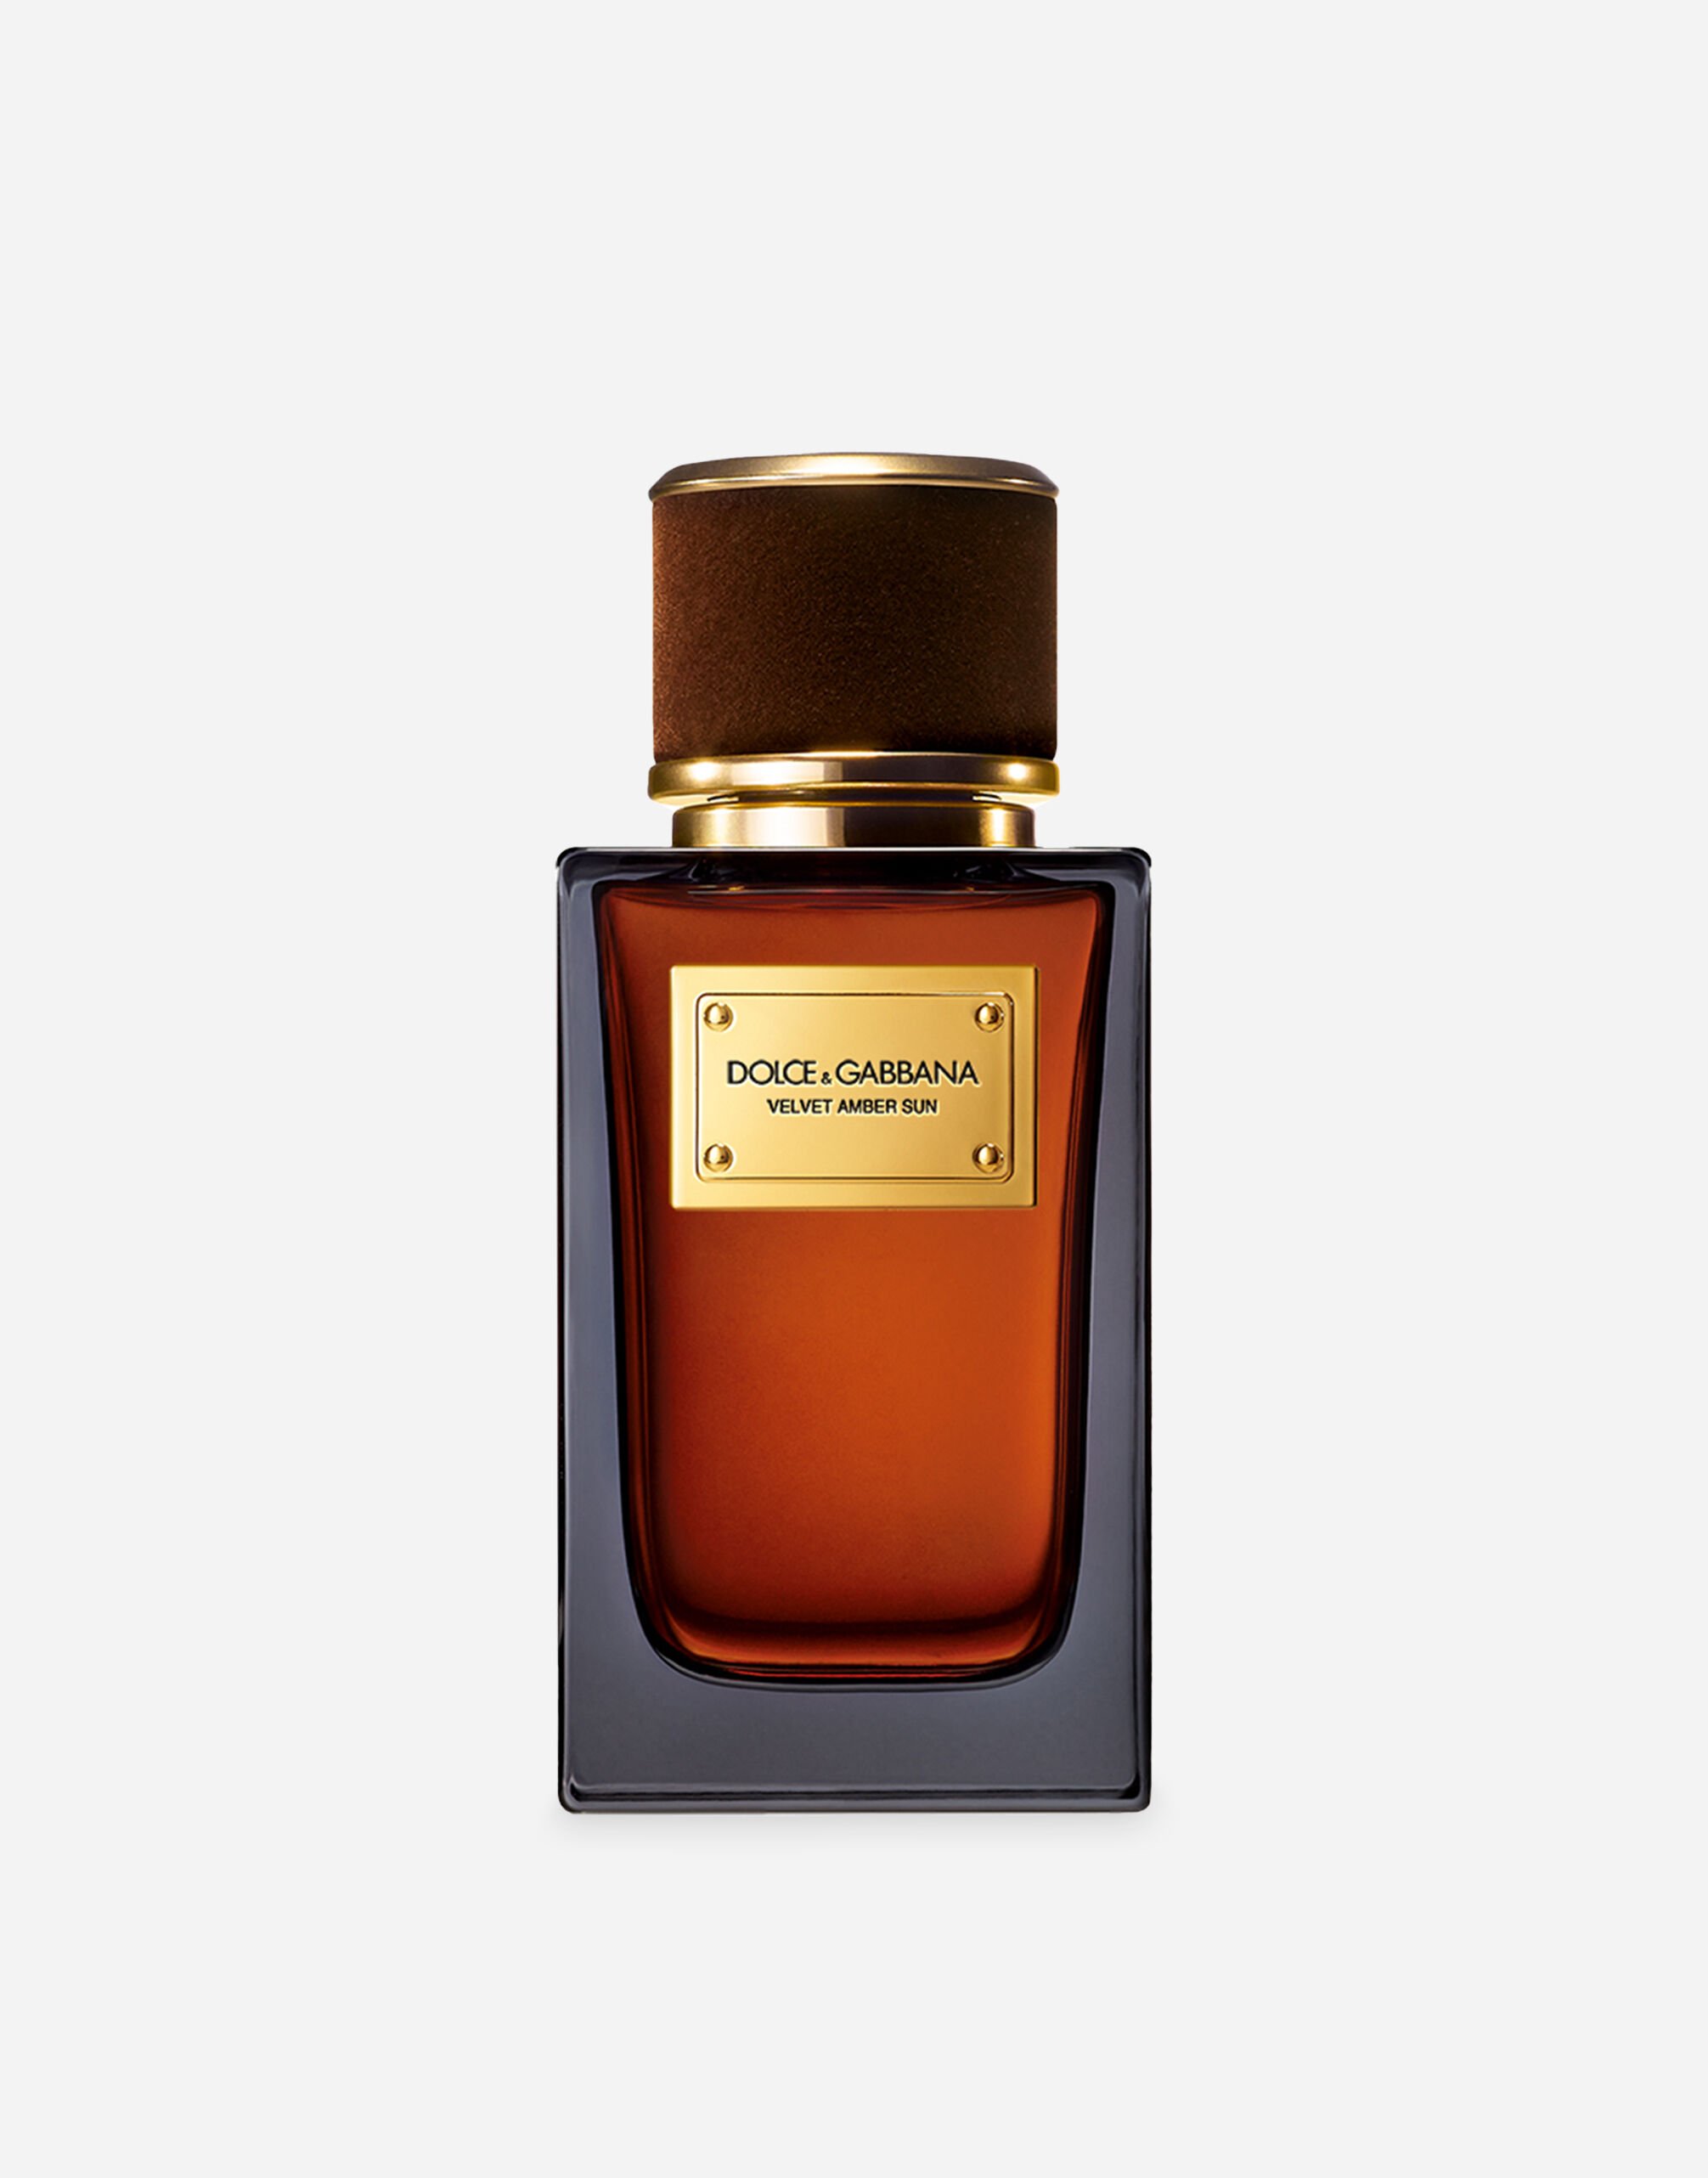 Dolce & Gabbana Velvet Amber Sun Eau de Parfum - VT00KBVT000